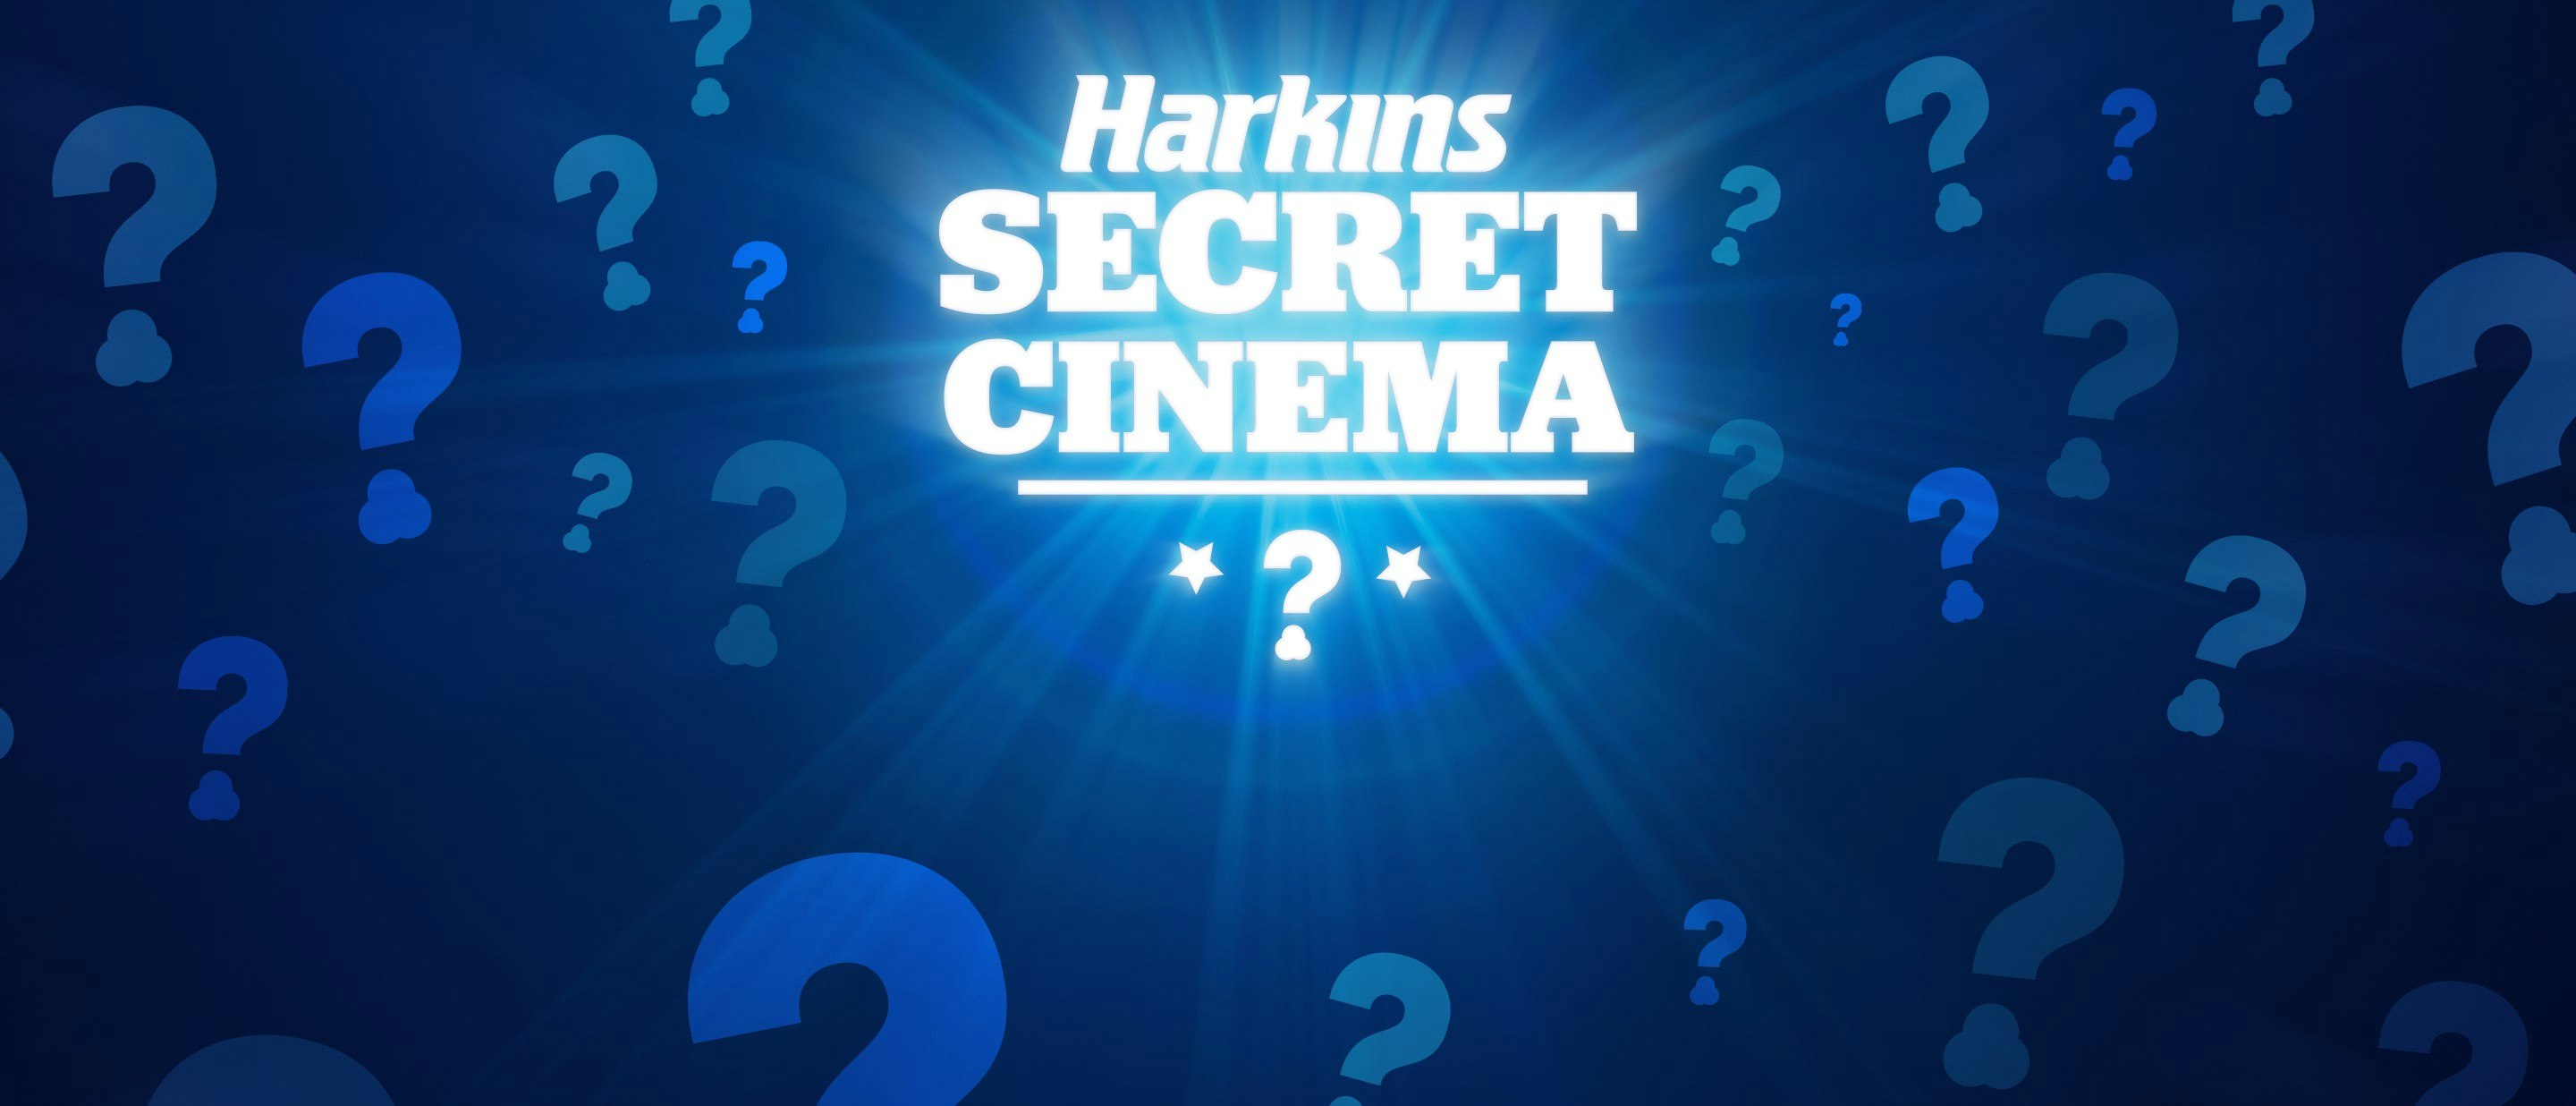 Harkins Secret Cinema 